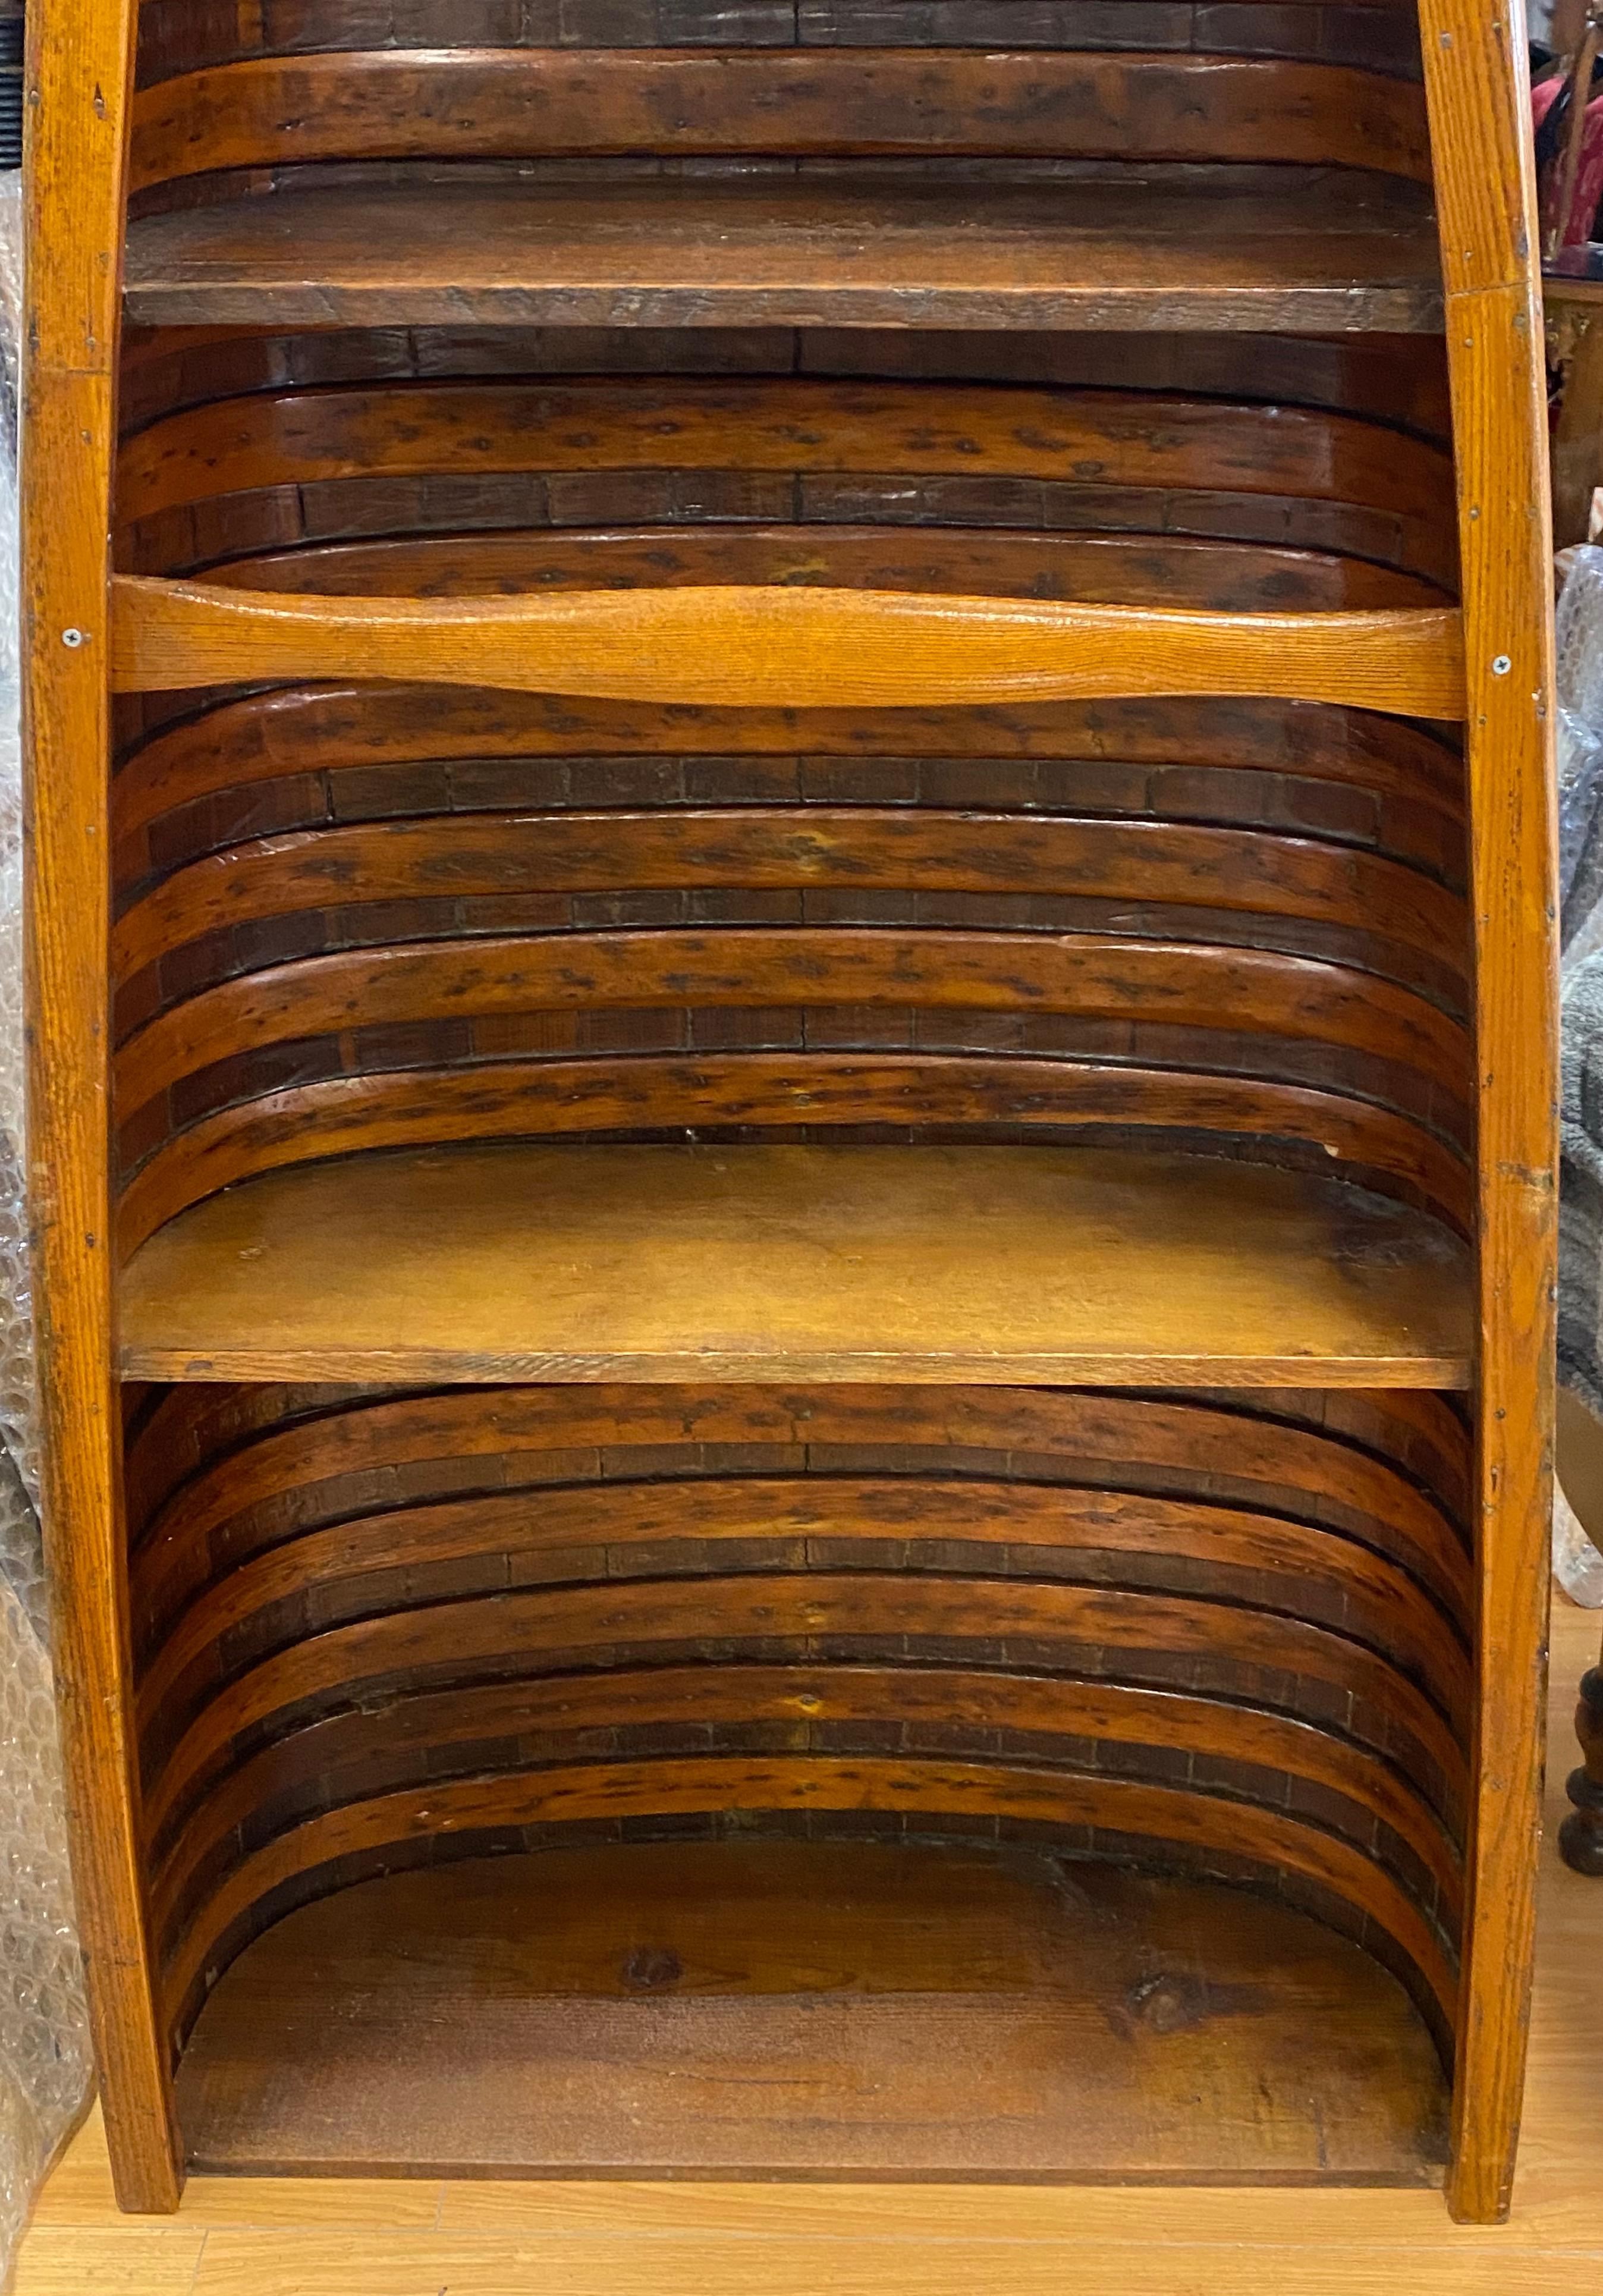 Vintage canoe bookcase / display shelving

Old school canoe converted into bookcase / display shelving

Measures: 36